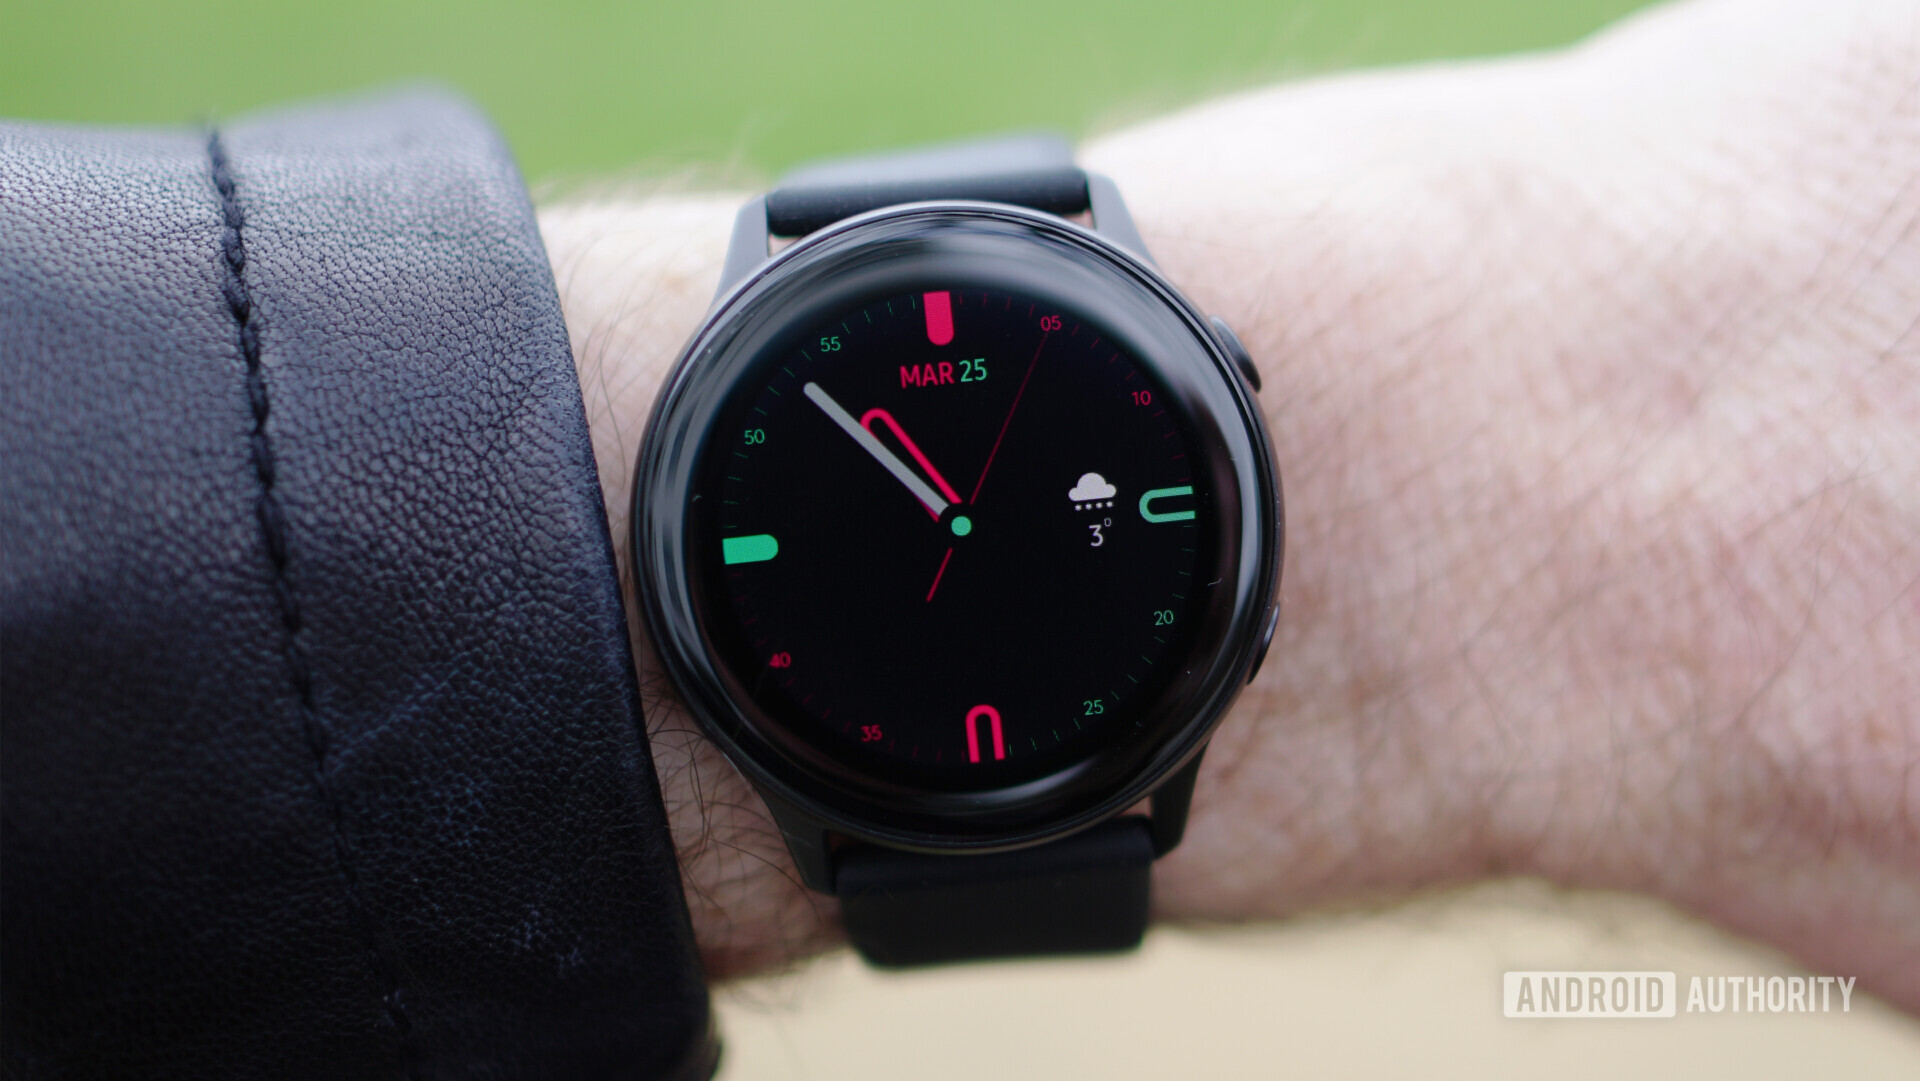 Samsung Galaxy Watch Active on fitness tracker deals list